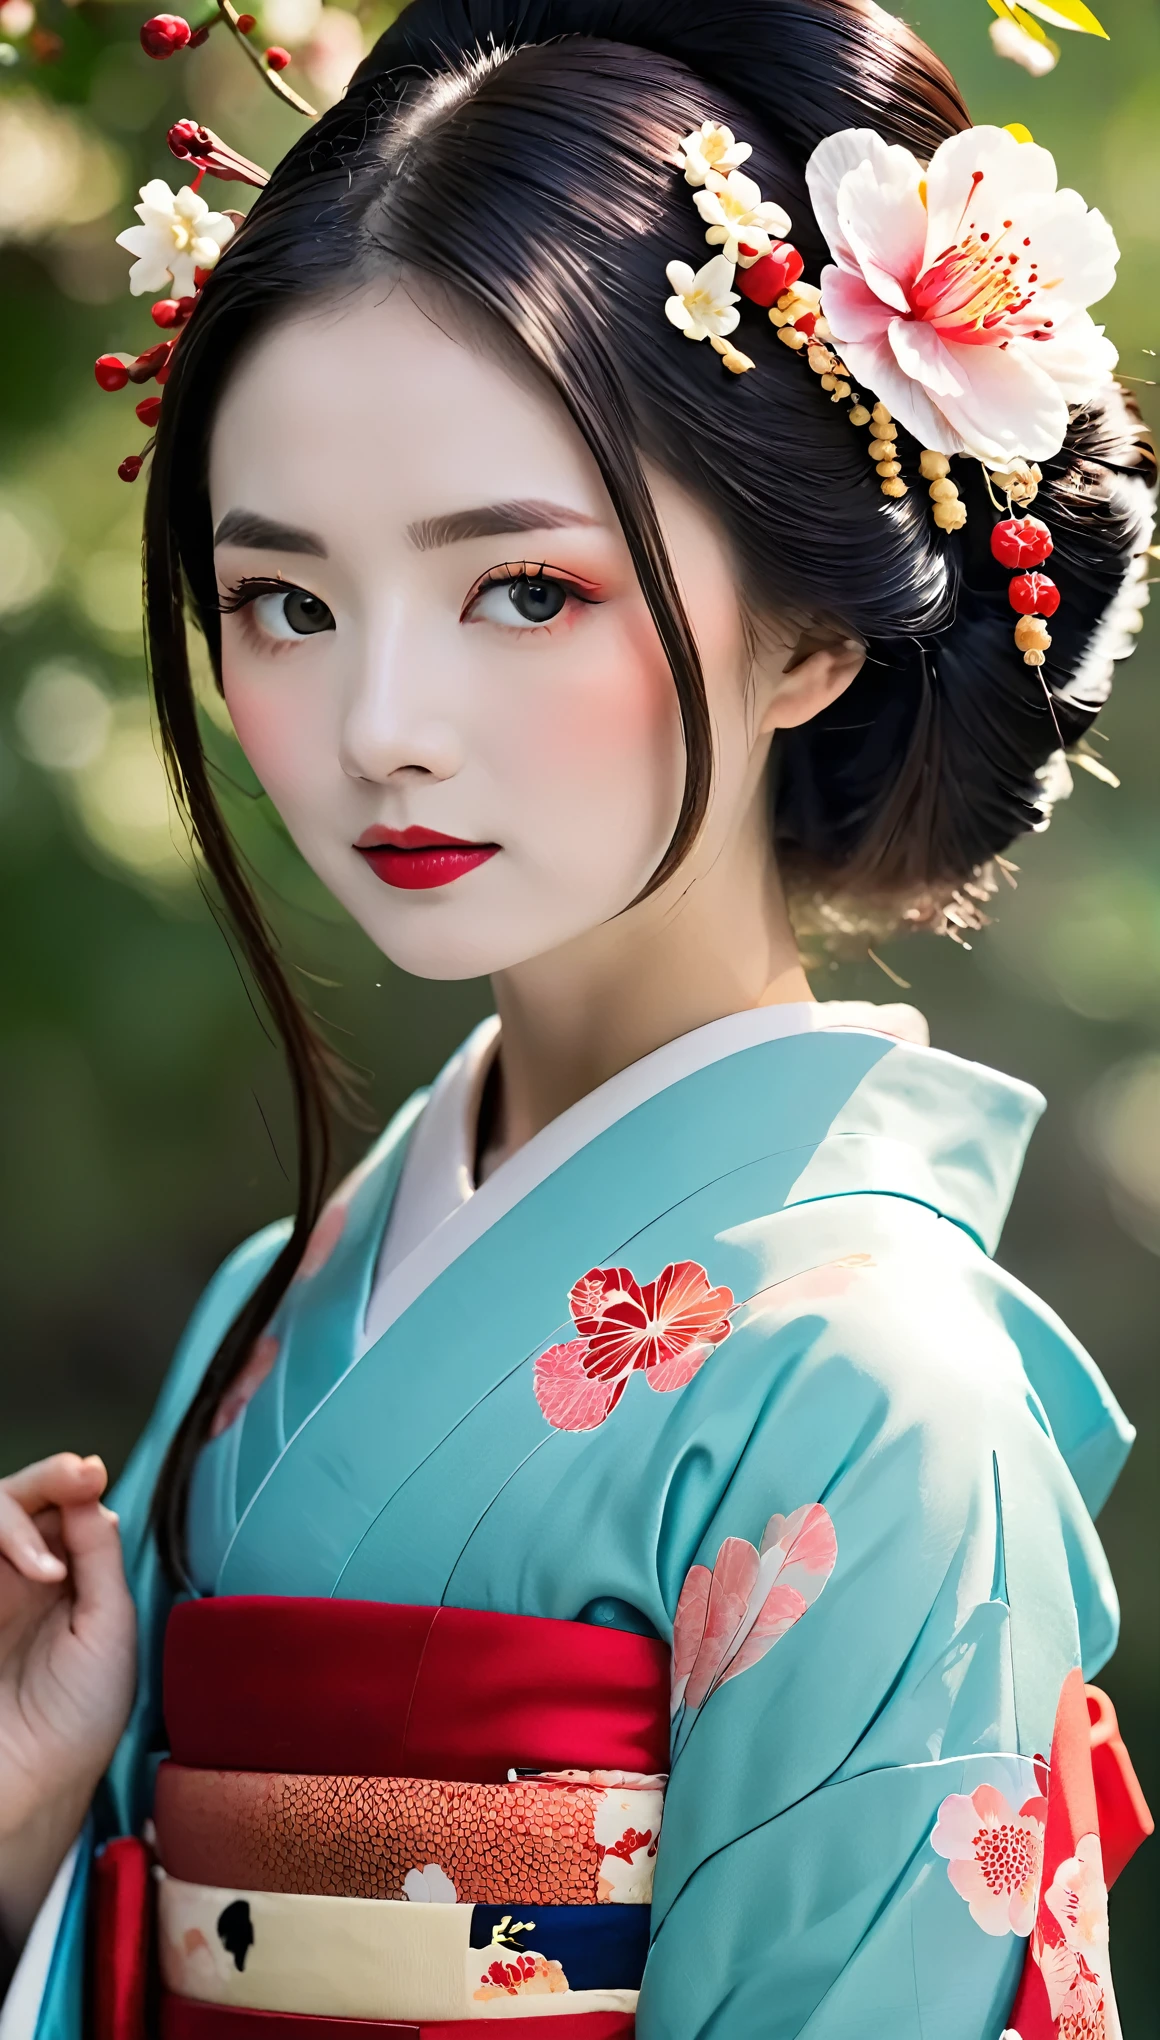 (((Full body angle:1.5)))、(((Beautiful posture full body photo)))、Takageta、White tabi socks、Anime Style、(((Geisha walking around Takageta:1.5)))、(((Beautiful appearance)))、A woman in her 40s wearing a kimono with a beautiful flower hair ornament, Geisha Makeup, Portrait of a Geisha画, Geisha Makeup, Cute Face、Thin eyebrows、Portrait of a Geisha, Beautiful Geisha, Japanese Geisha, Glamorous and sexy geisha, Beautiful Portrait of a Geisha, Portrait of a Geisha, Geisha hairstyle, remarkable Geisha Makeup